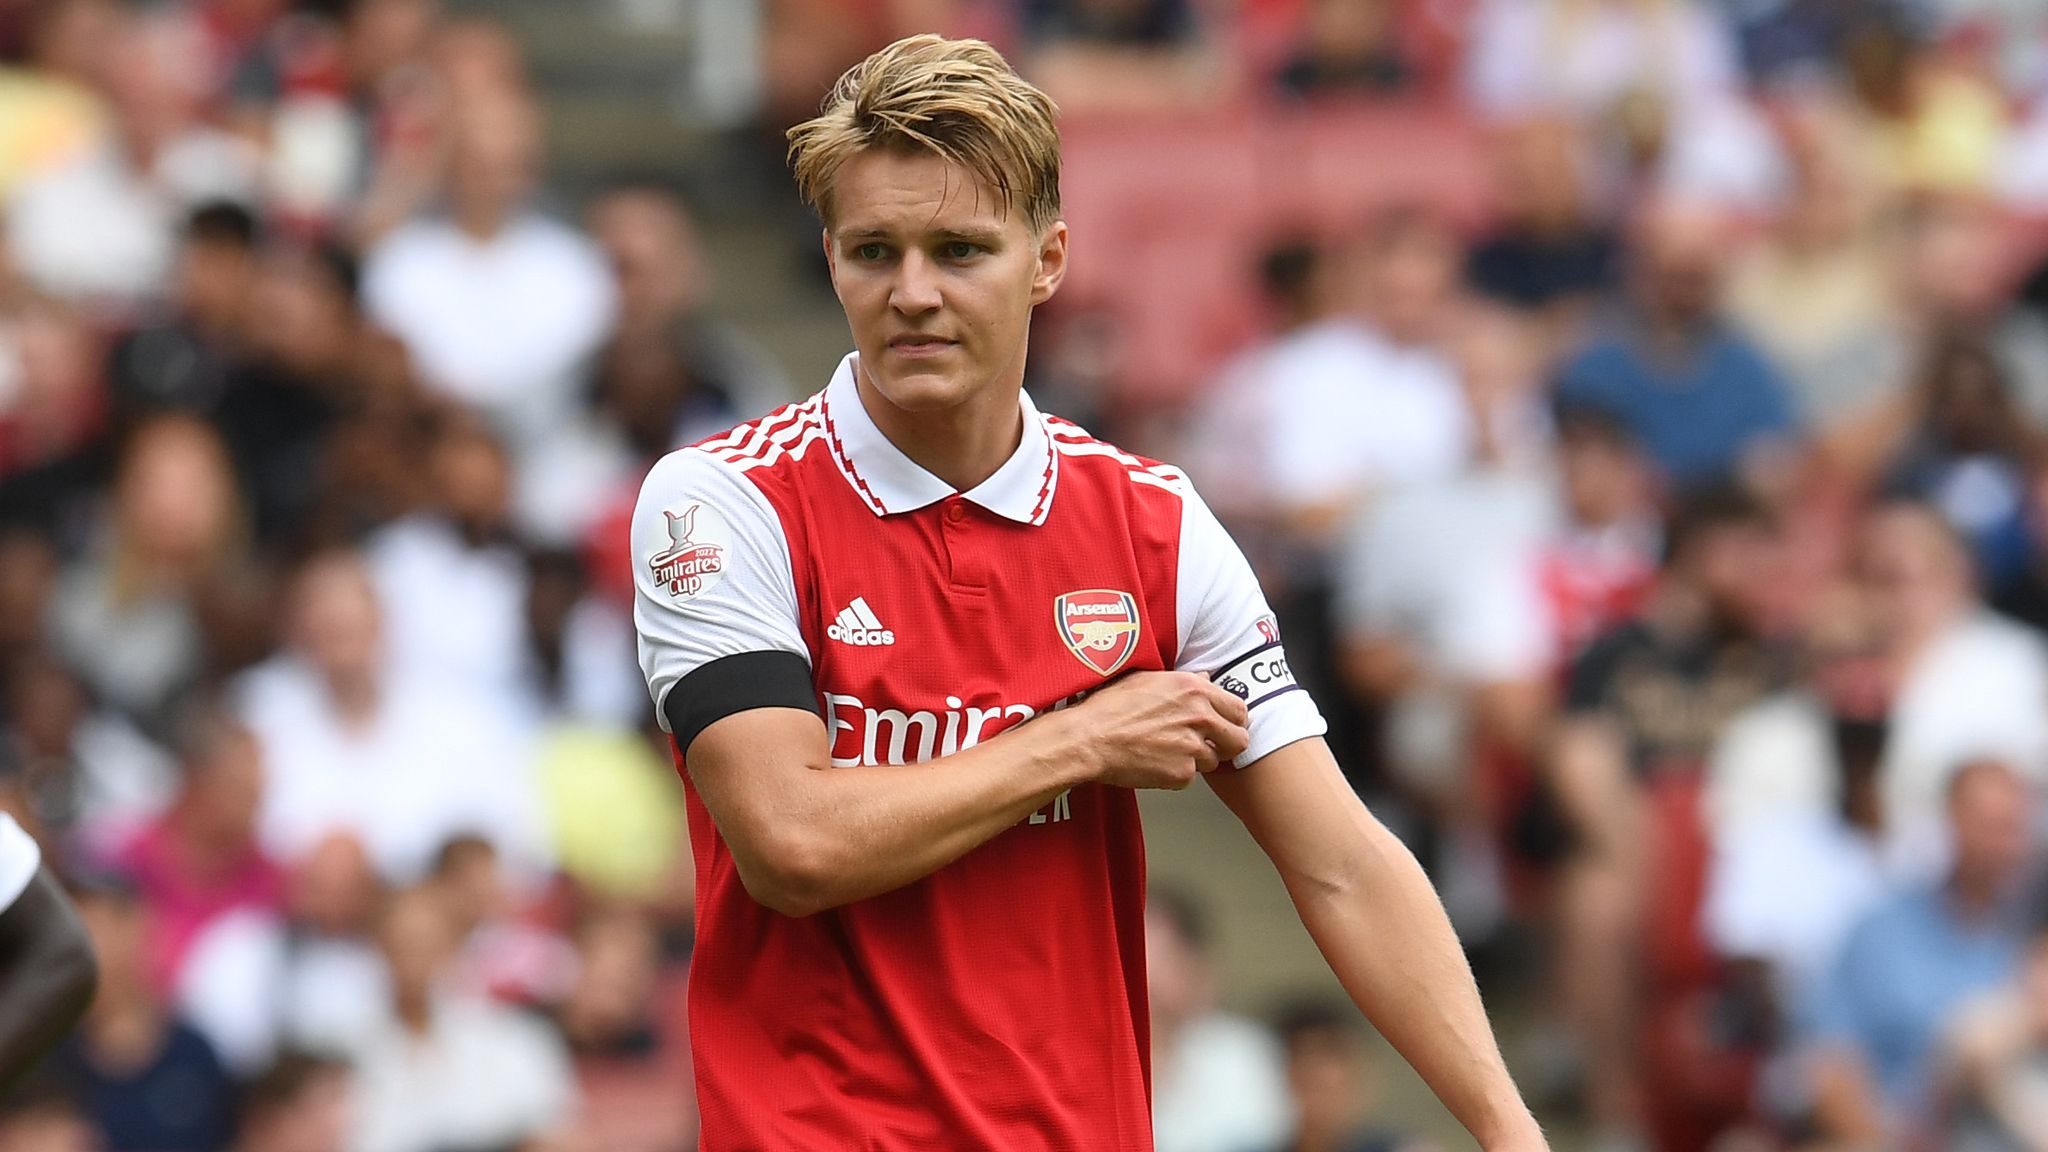 Martin Odegaard: Arsenal Name Norwegian Midfielder As New First Team Captain Ahead Of New Season